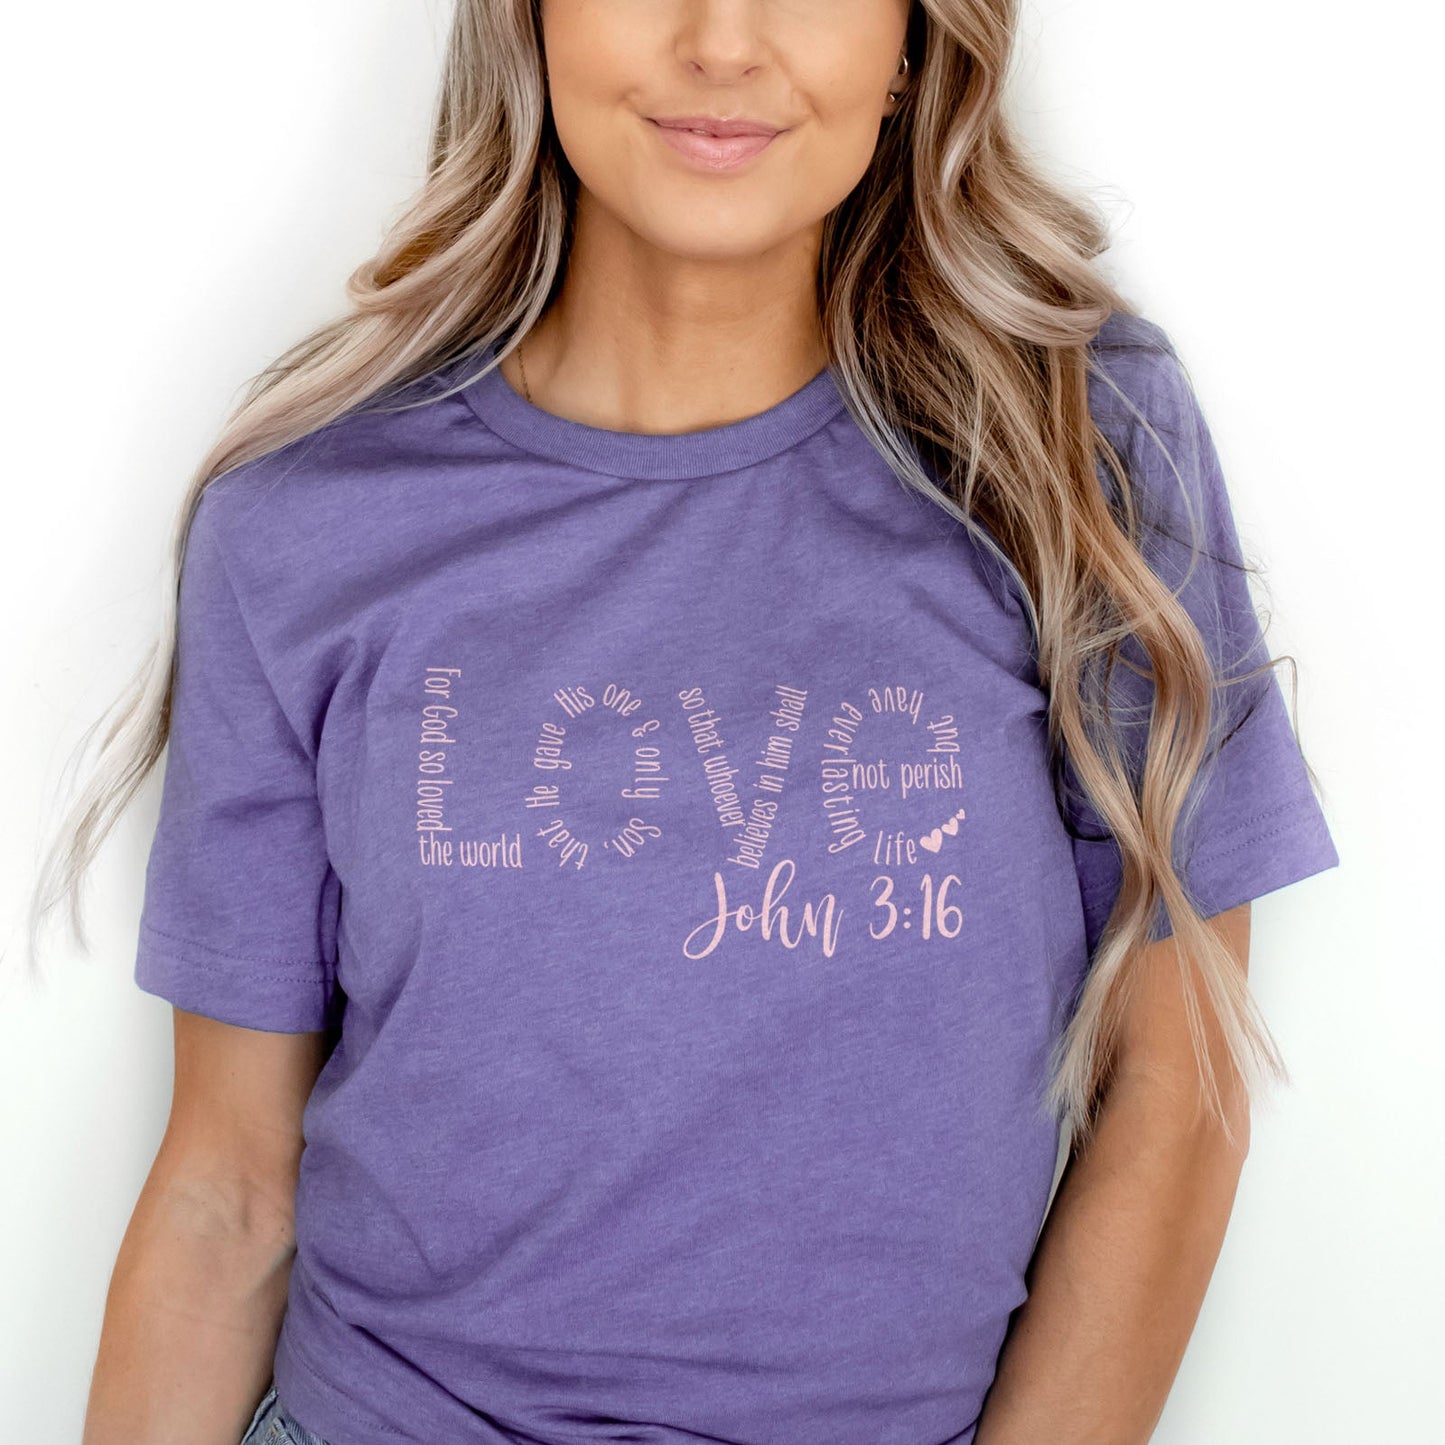 Love John 3:16 Tee Shirts For Women - Christian Shirts for Women - Religious Tee Shirts